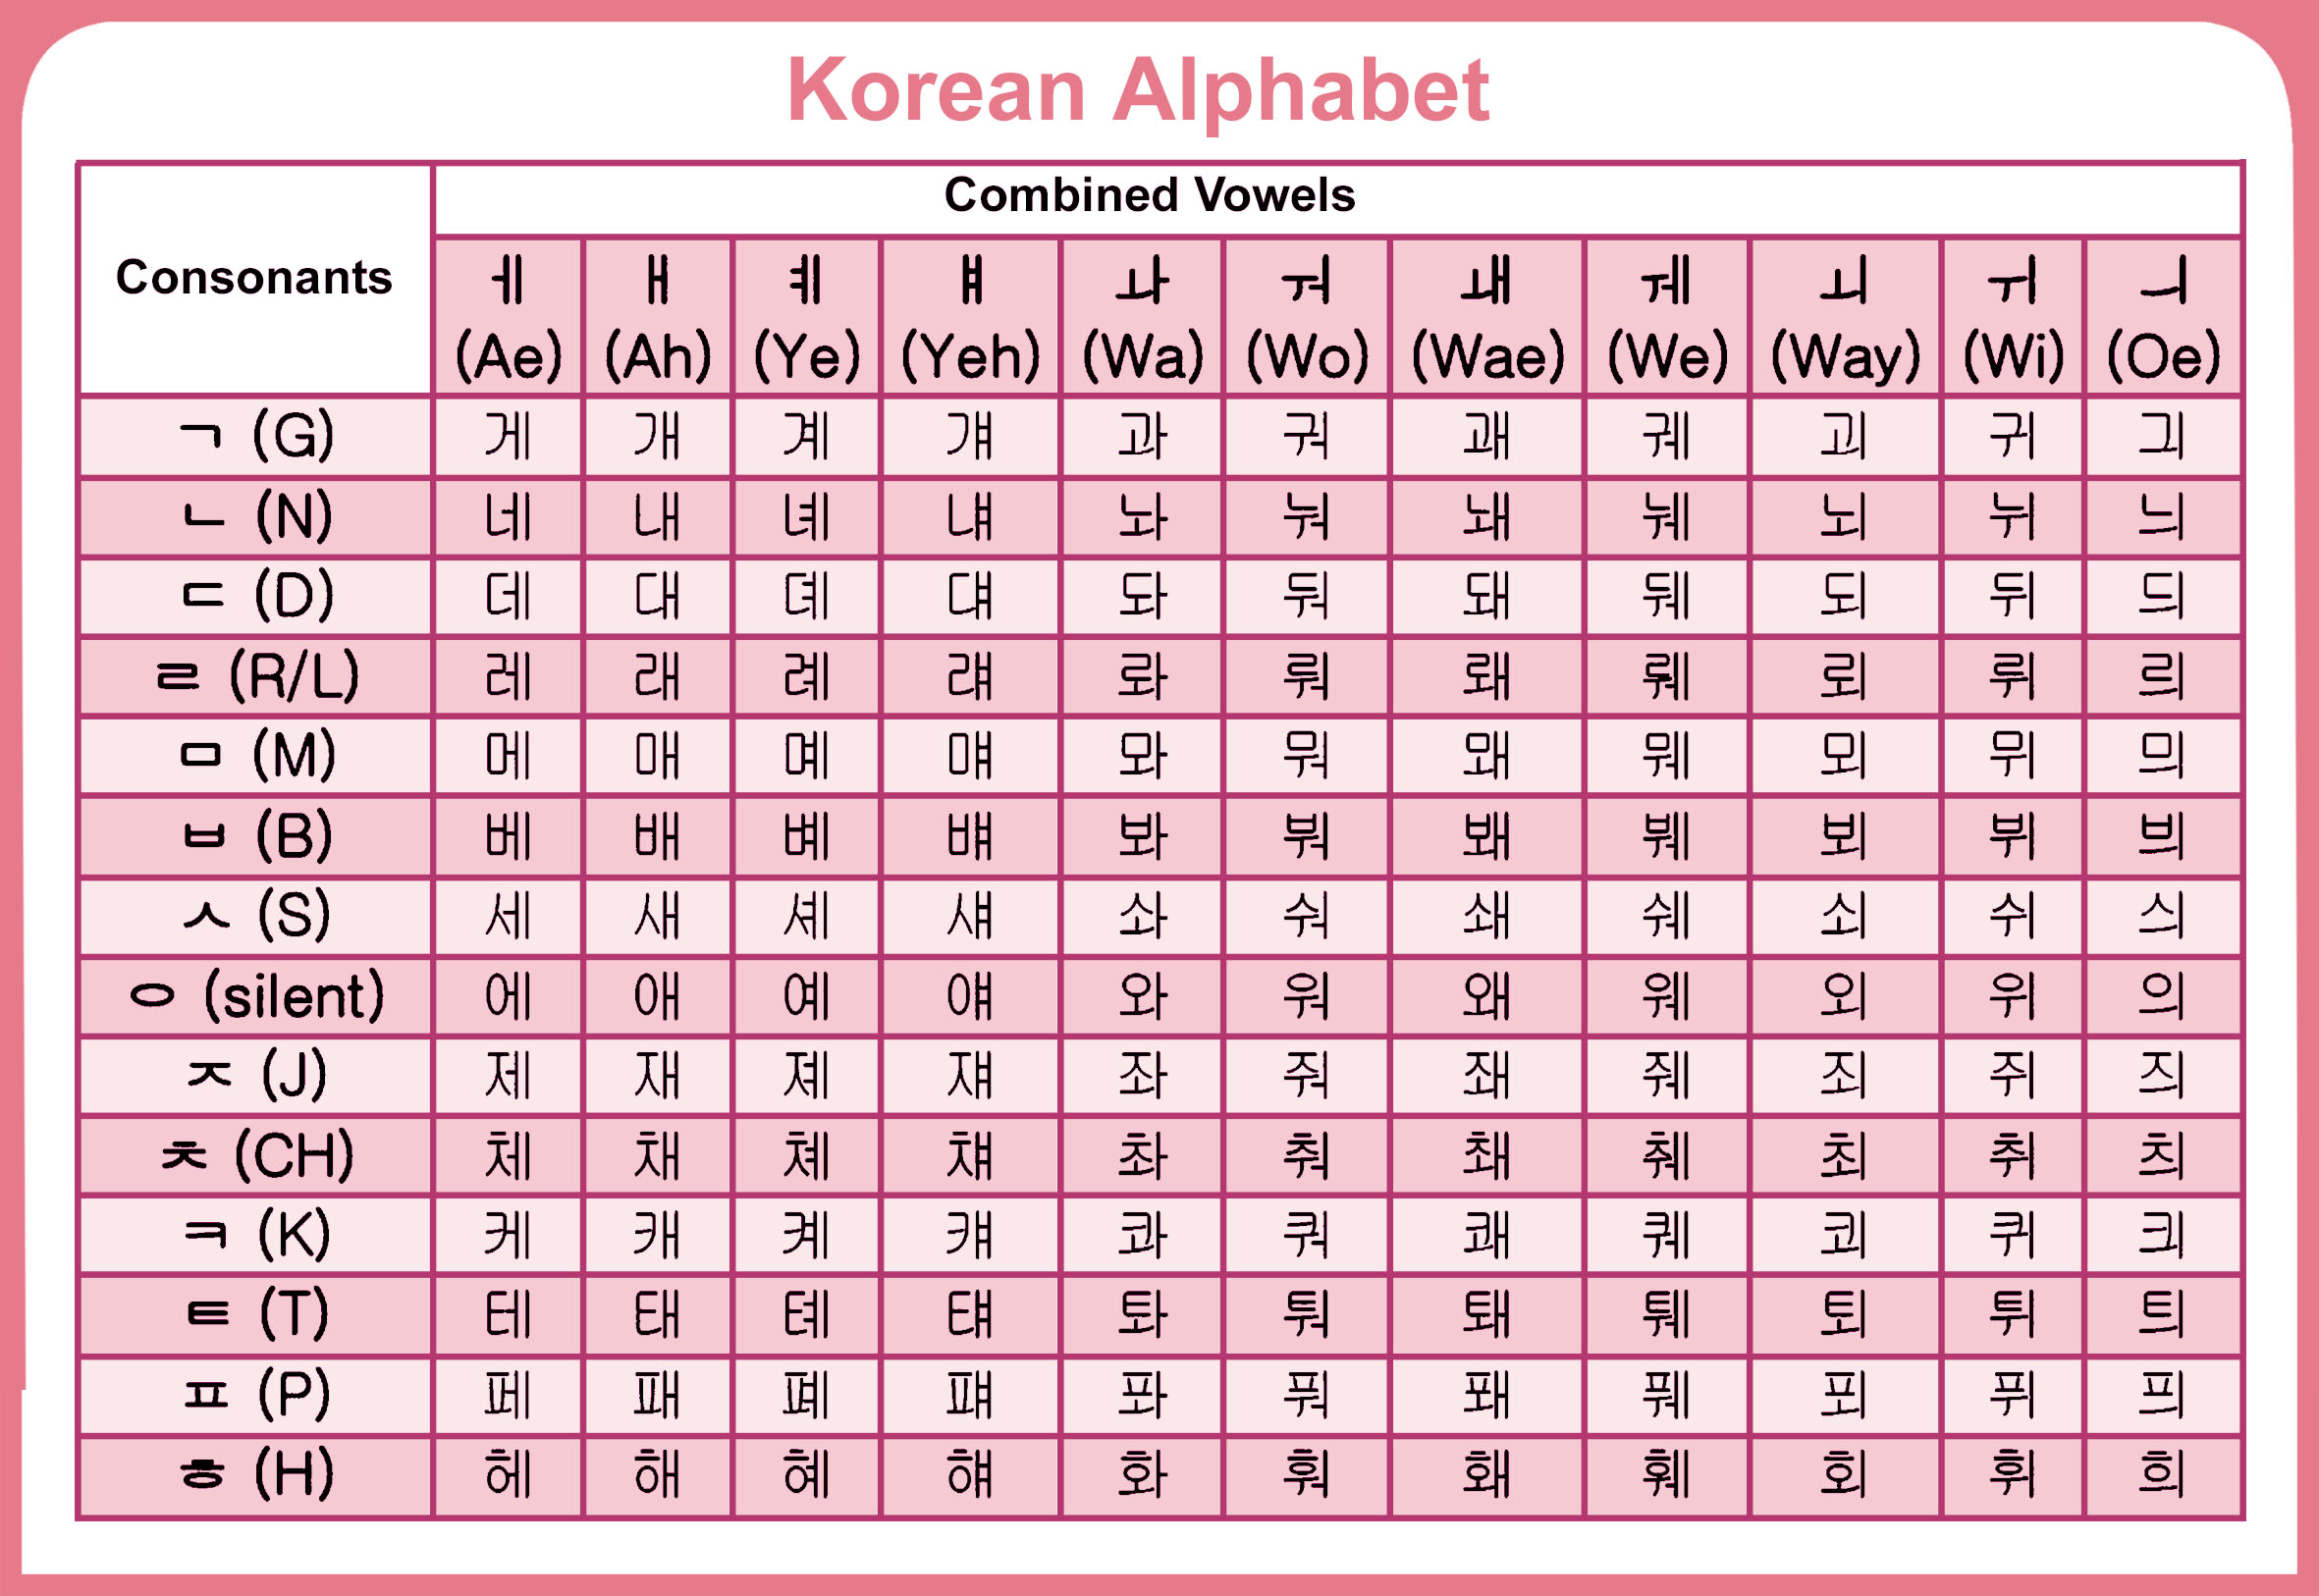 Korean Alphabet Chart. Korean alphabets. Korean language.